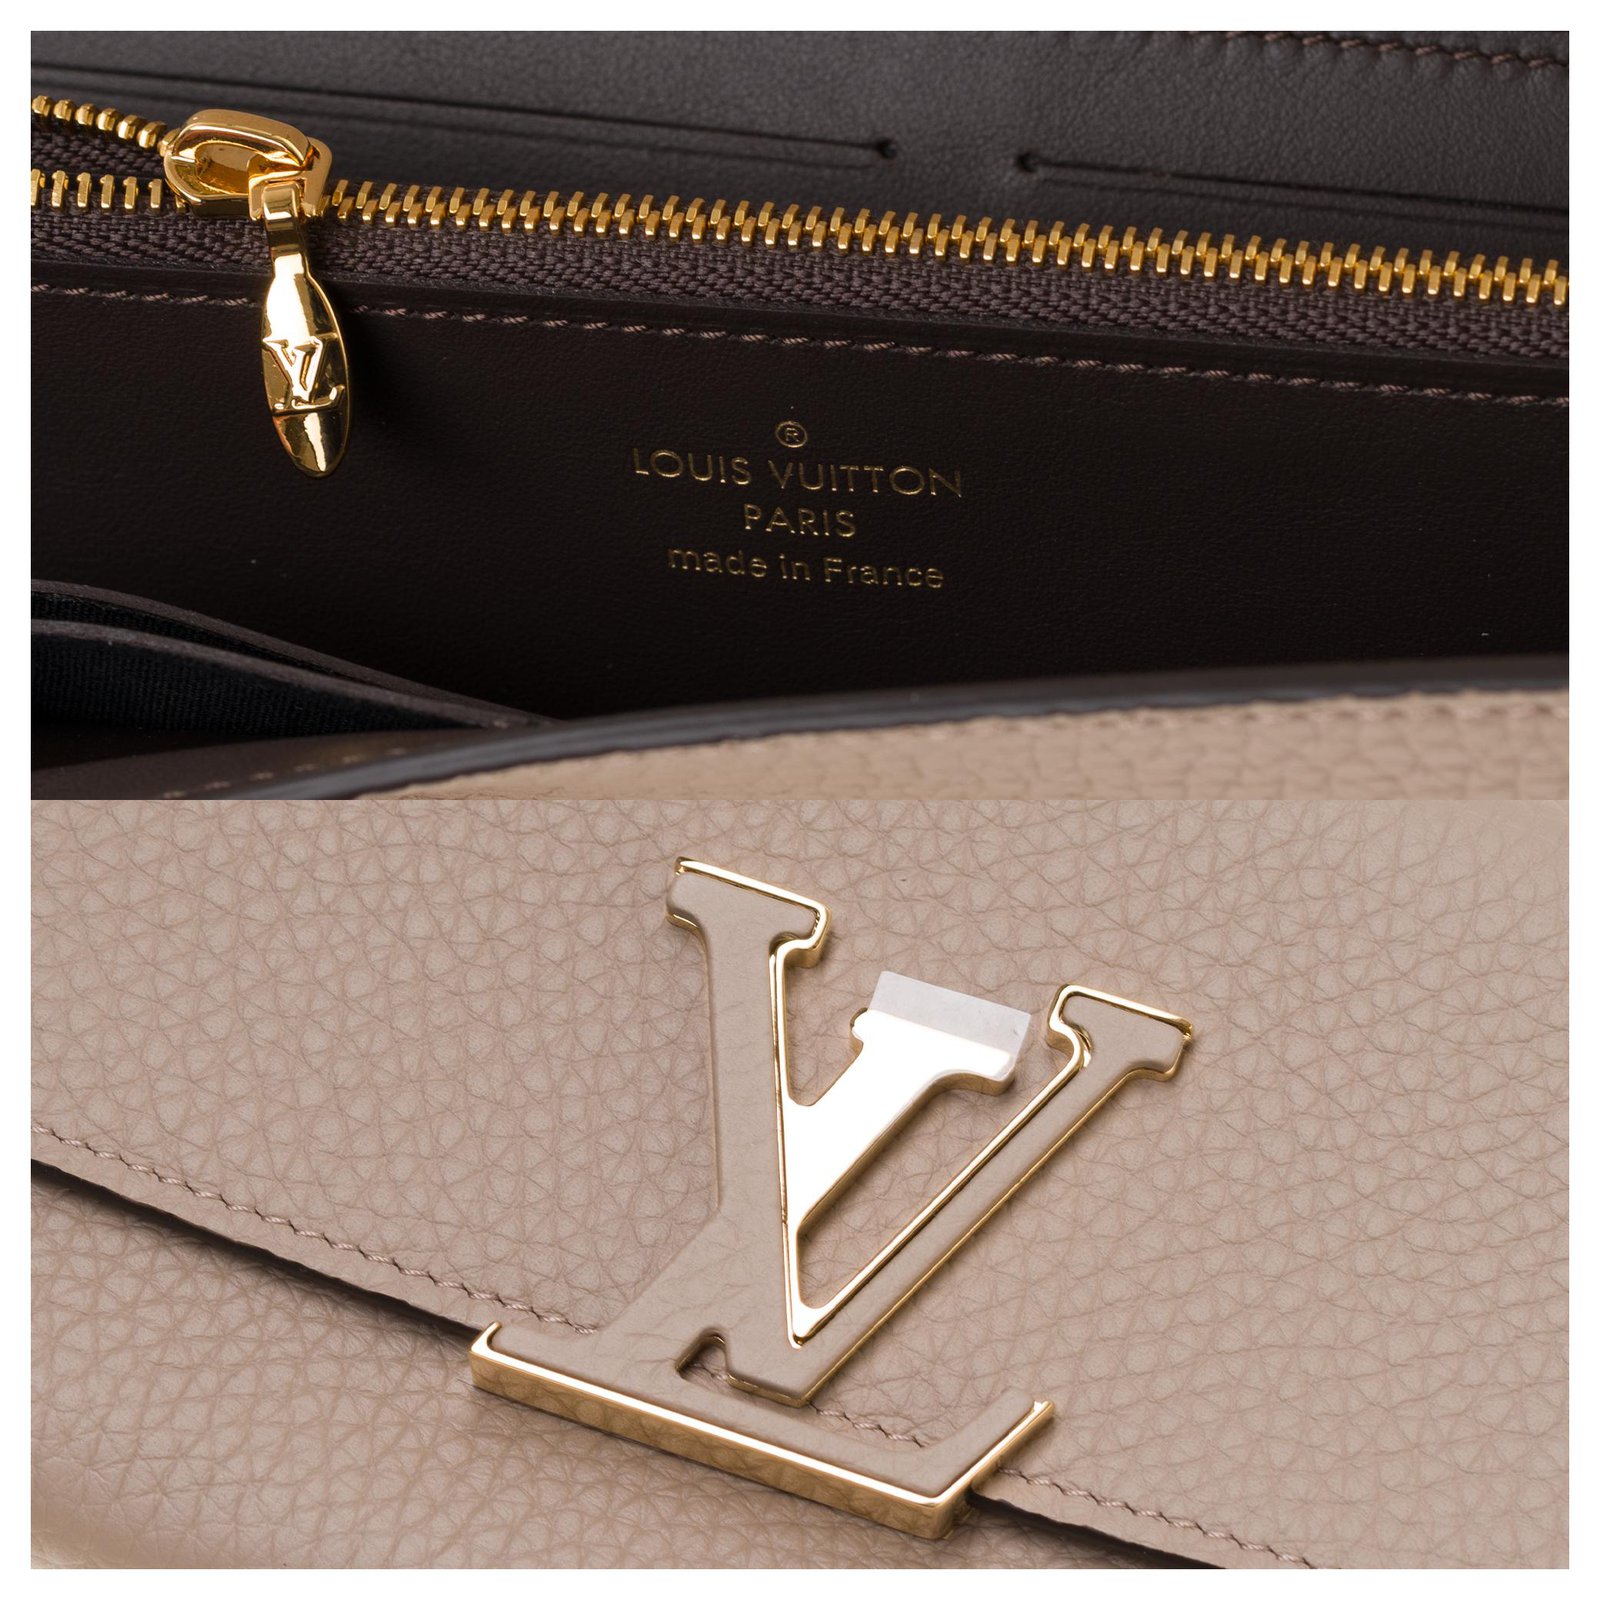 Louis Vuitton Capucines wallet in pebble Taurillon Beige Leather